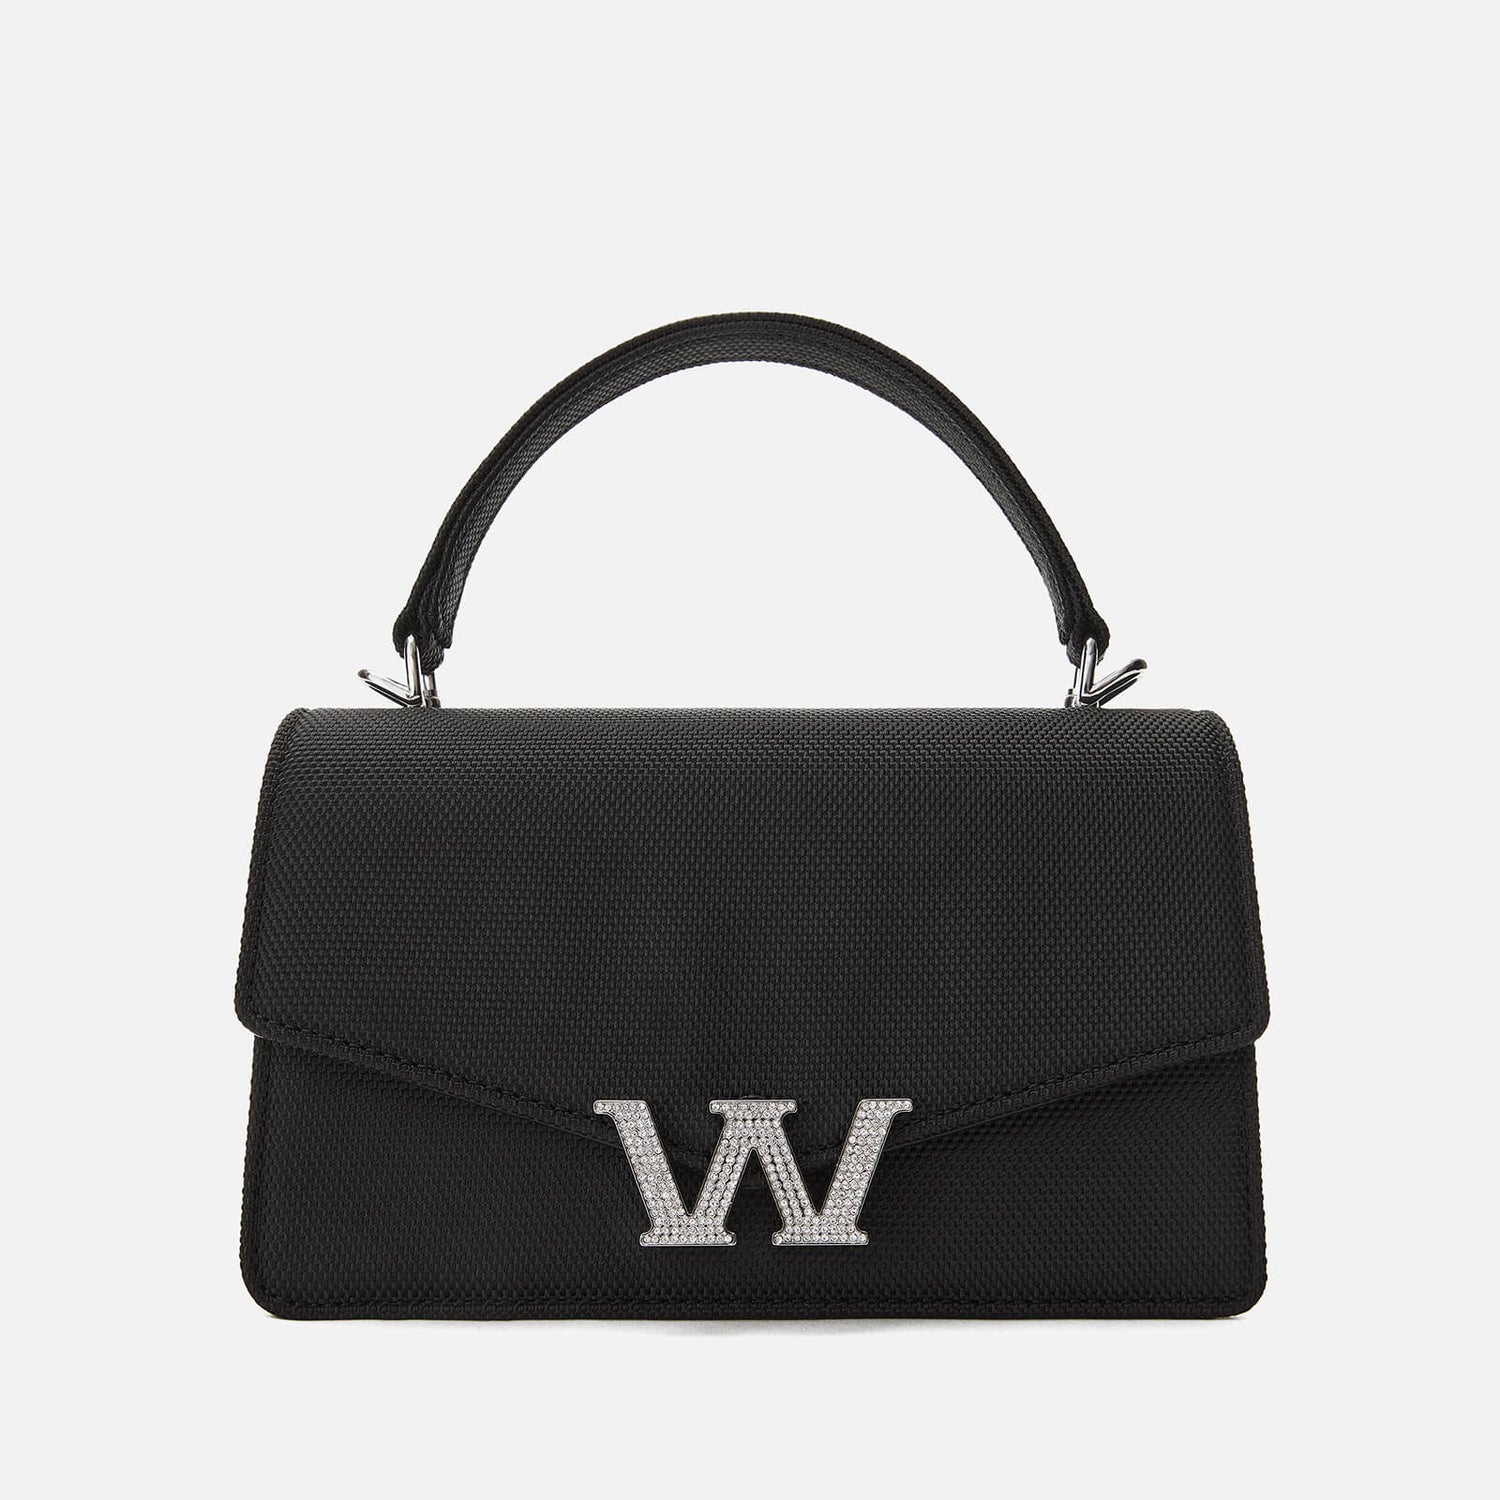 Alexander Wang Women's W Legacy Mini Satchel - Black